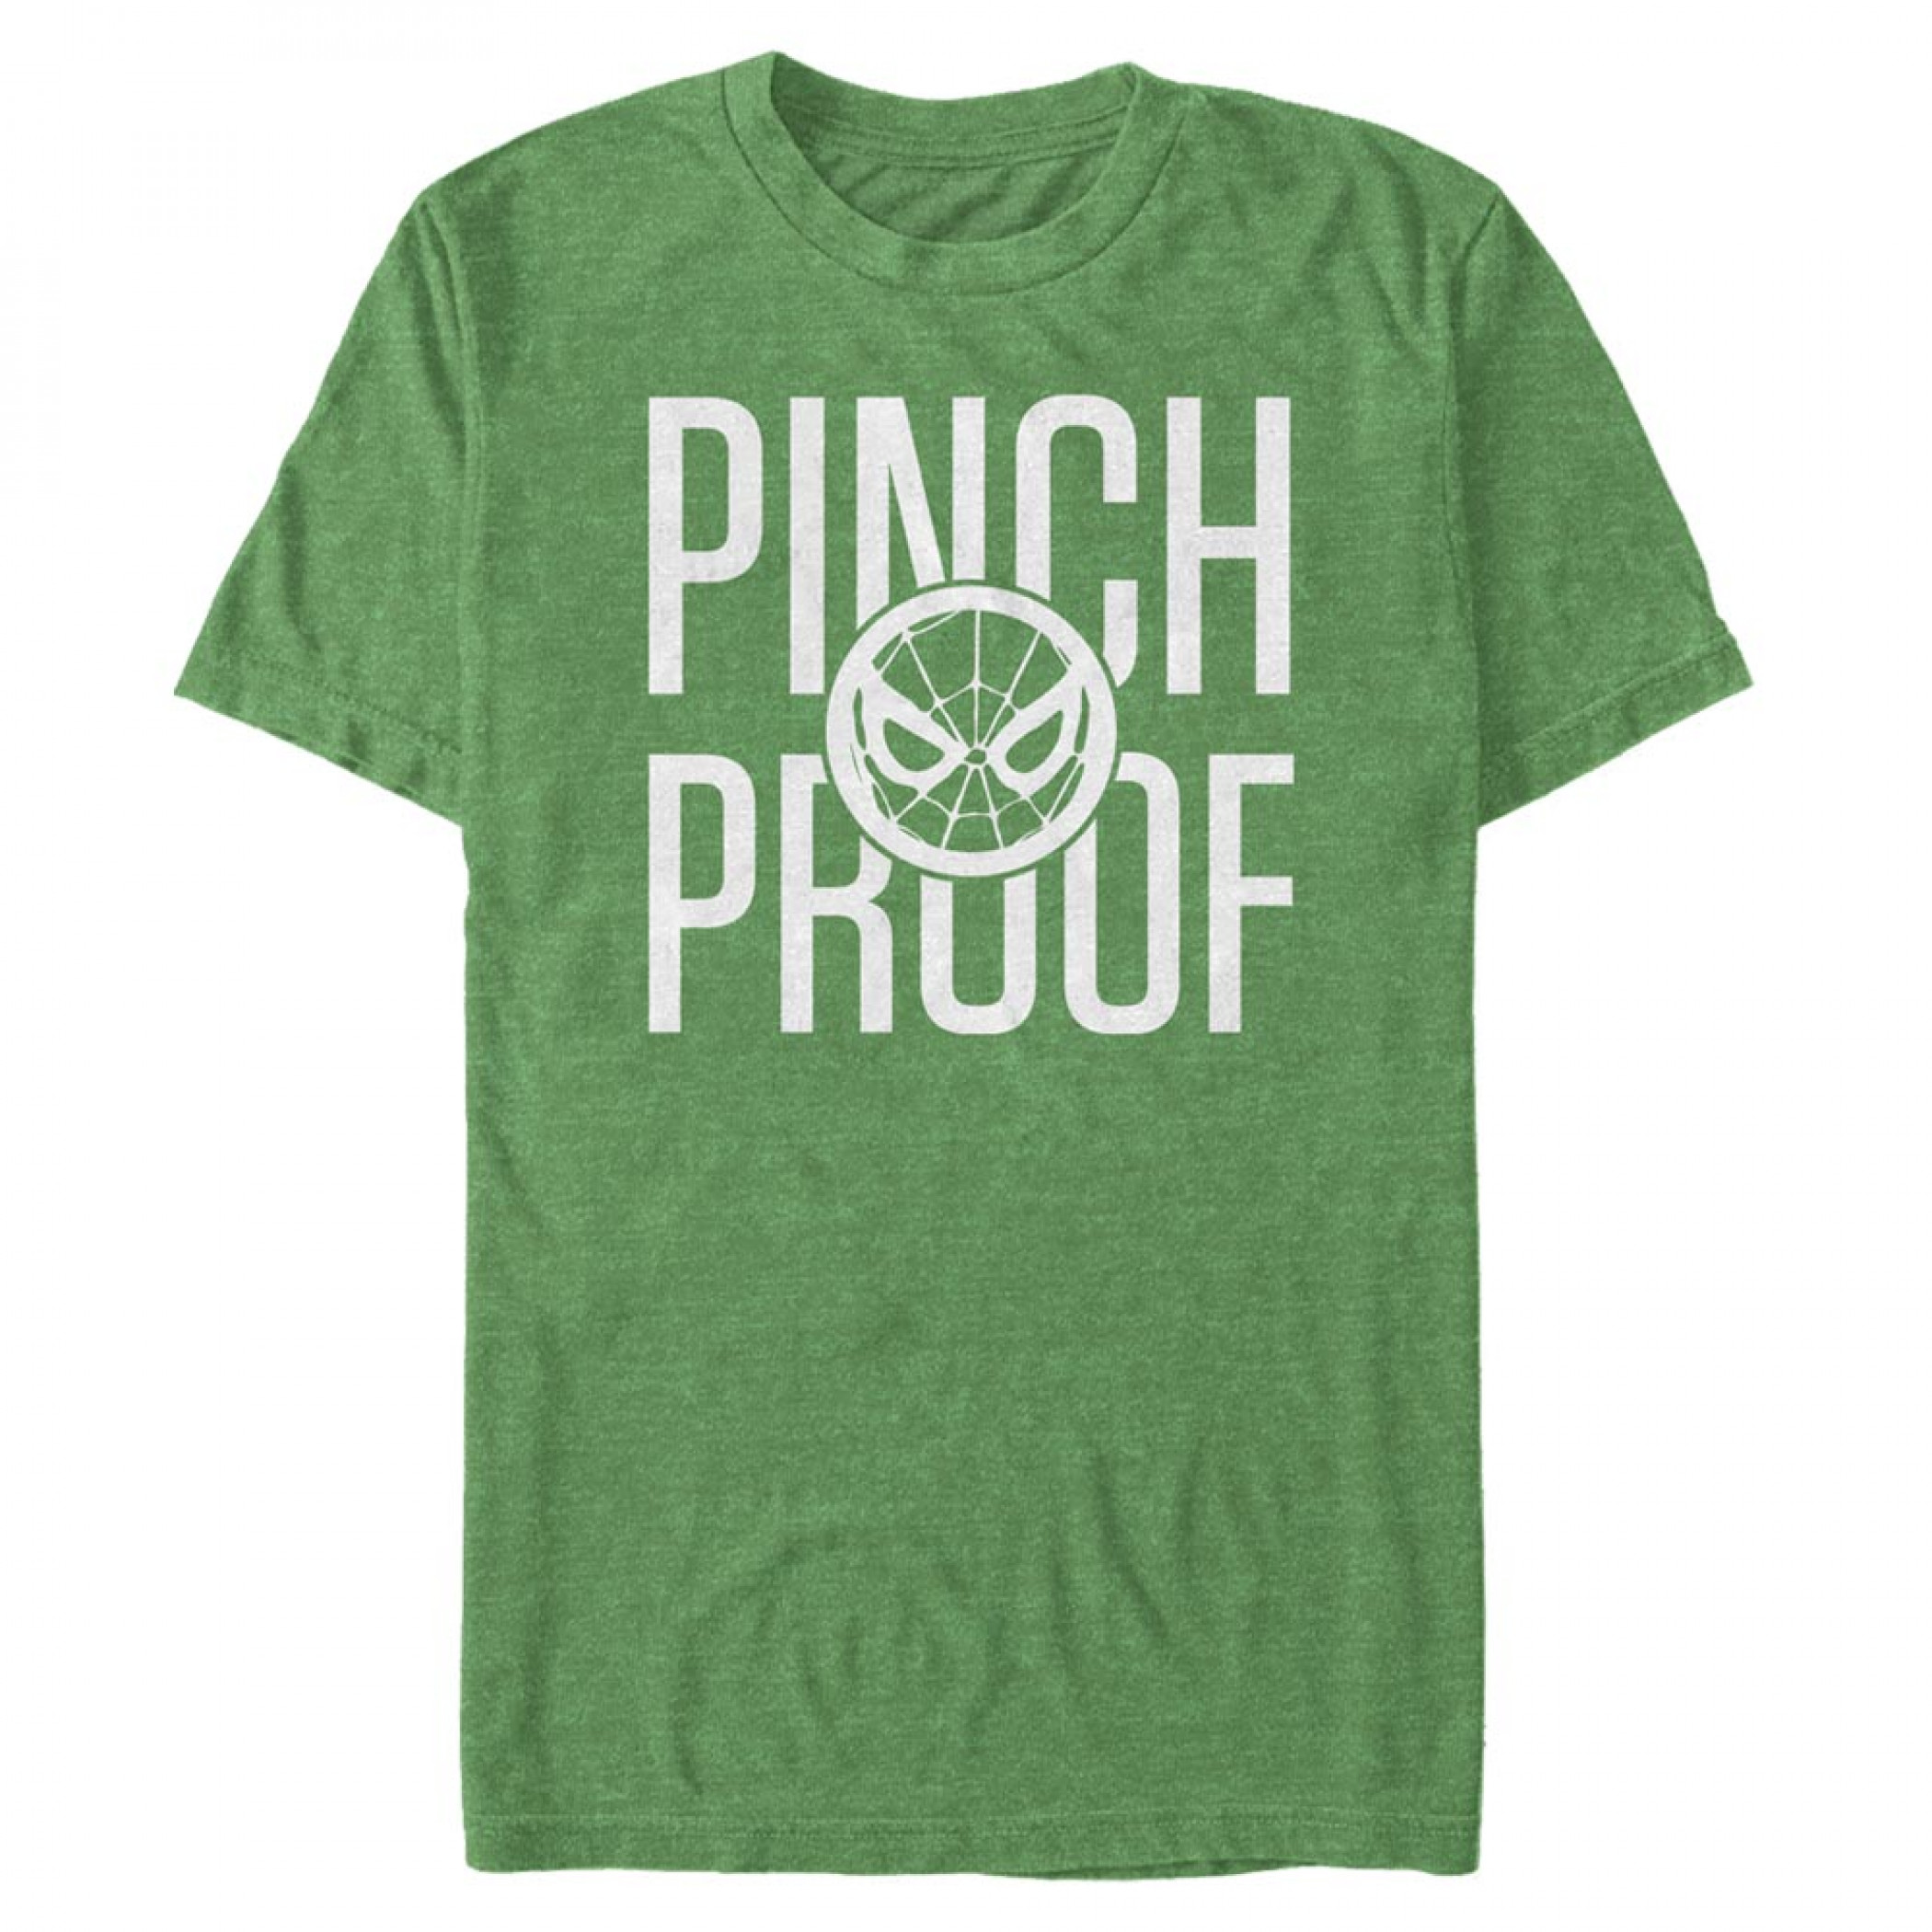 Spider-Man Pinch Proof Green T-Shirt